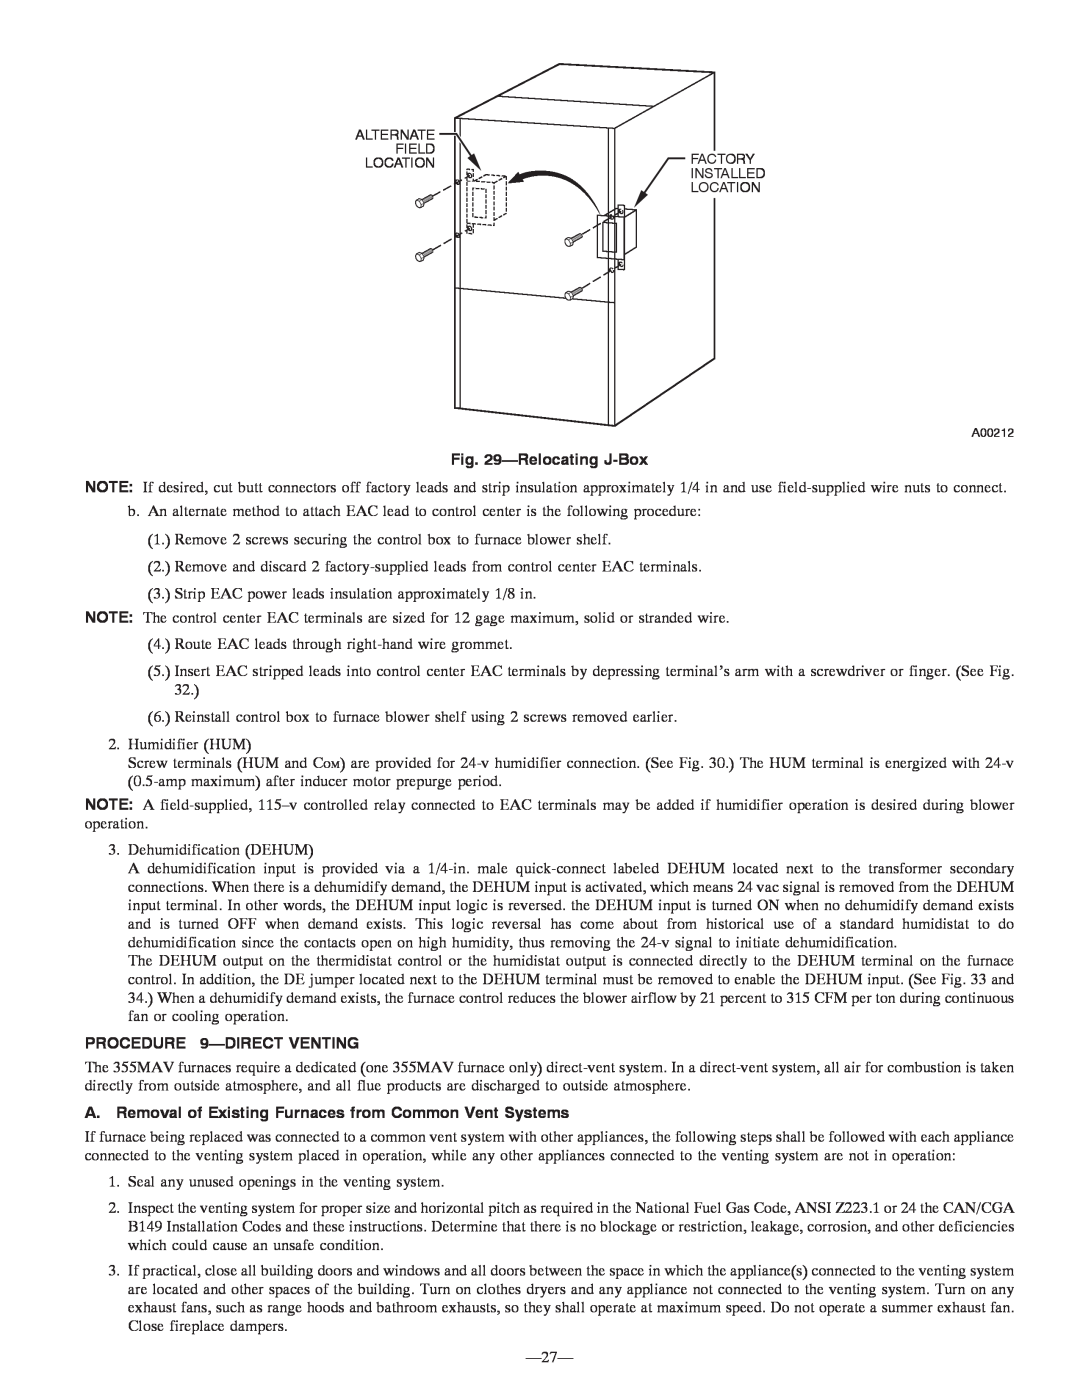 Bryant 355MAV instruction manual Relocating J-Box, PROCEDURE 9-DIRECTVENTING 